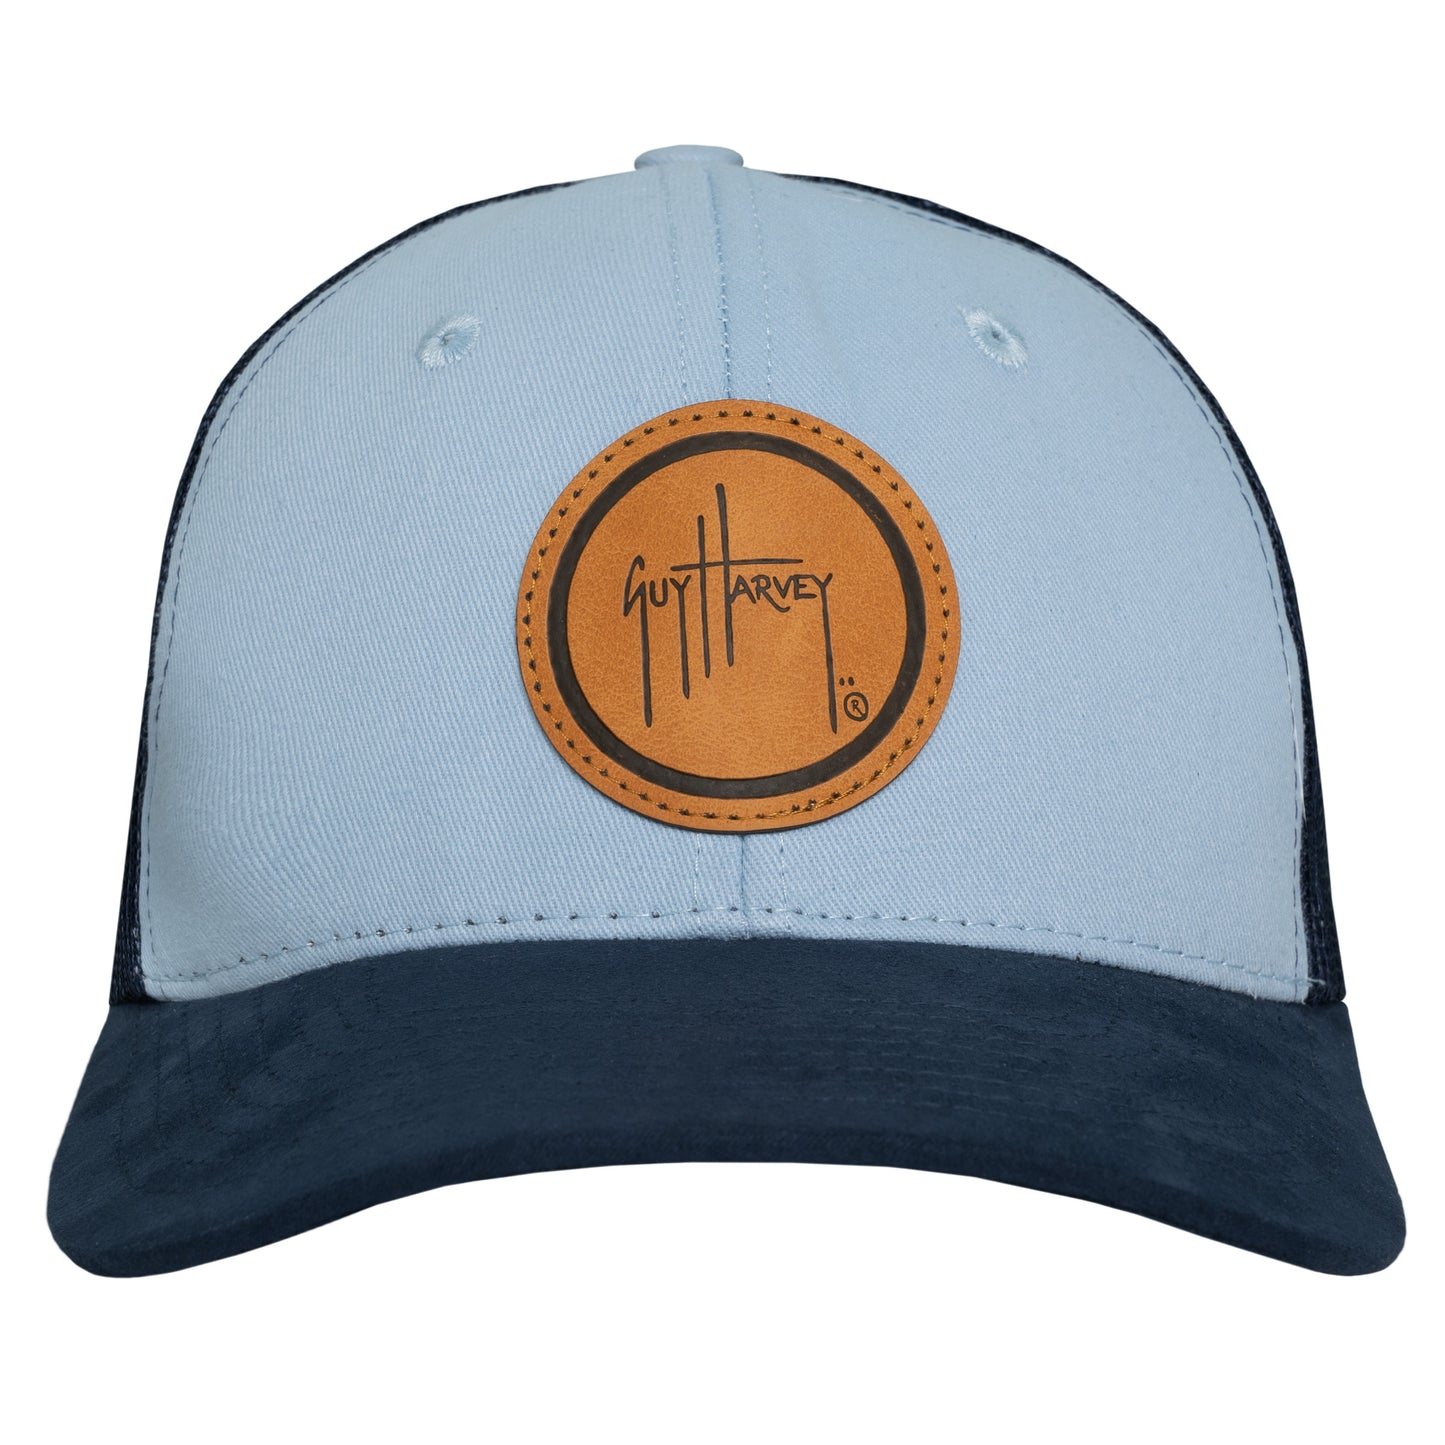 Guy Harvey Leather Patch Woven Mesh Trucker Hat